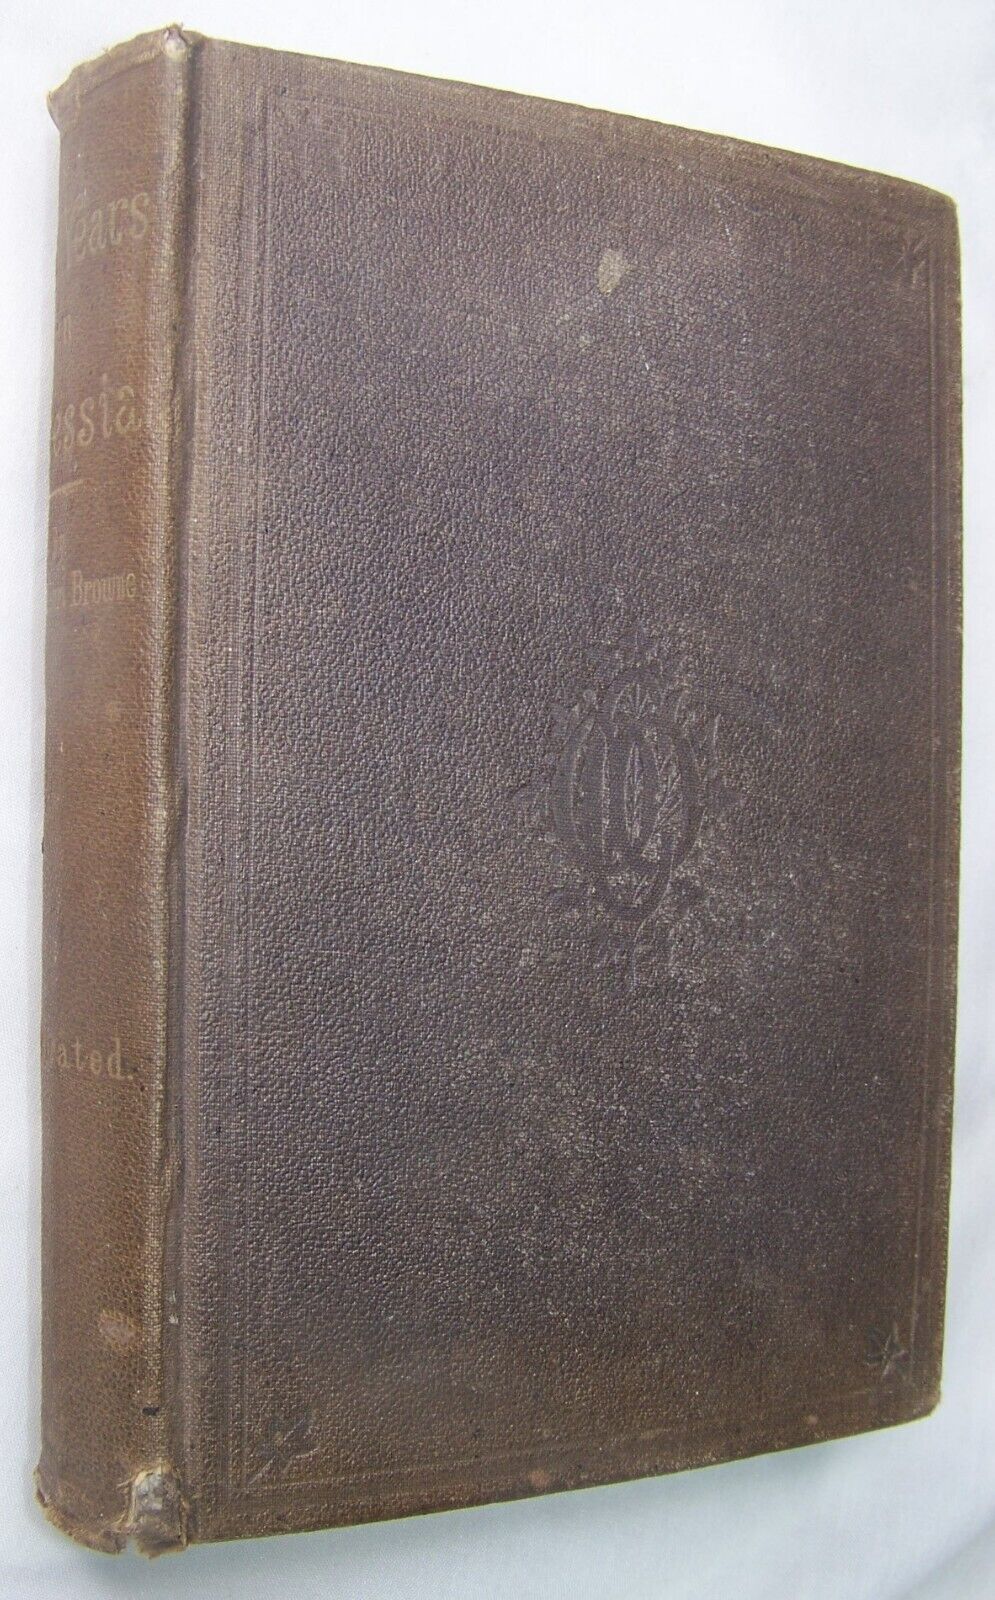 1865 ANTIQUE CIVIL WAR HISTORY BOOK 4 YEARS IN SECESSION JUNIUS BROWNE GAR UNION